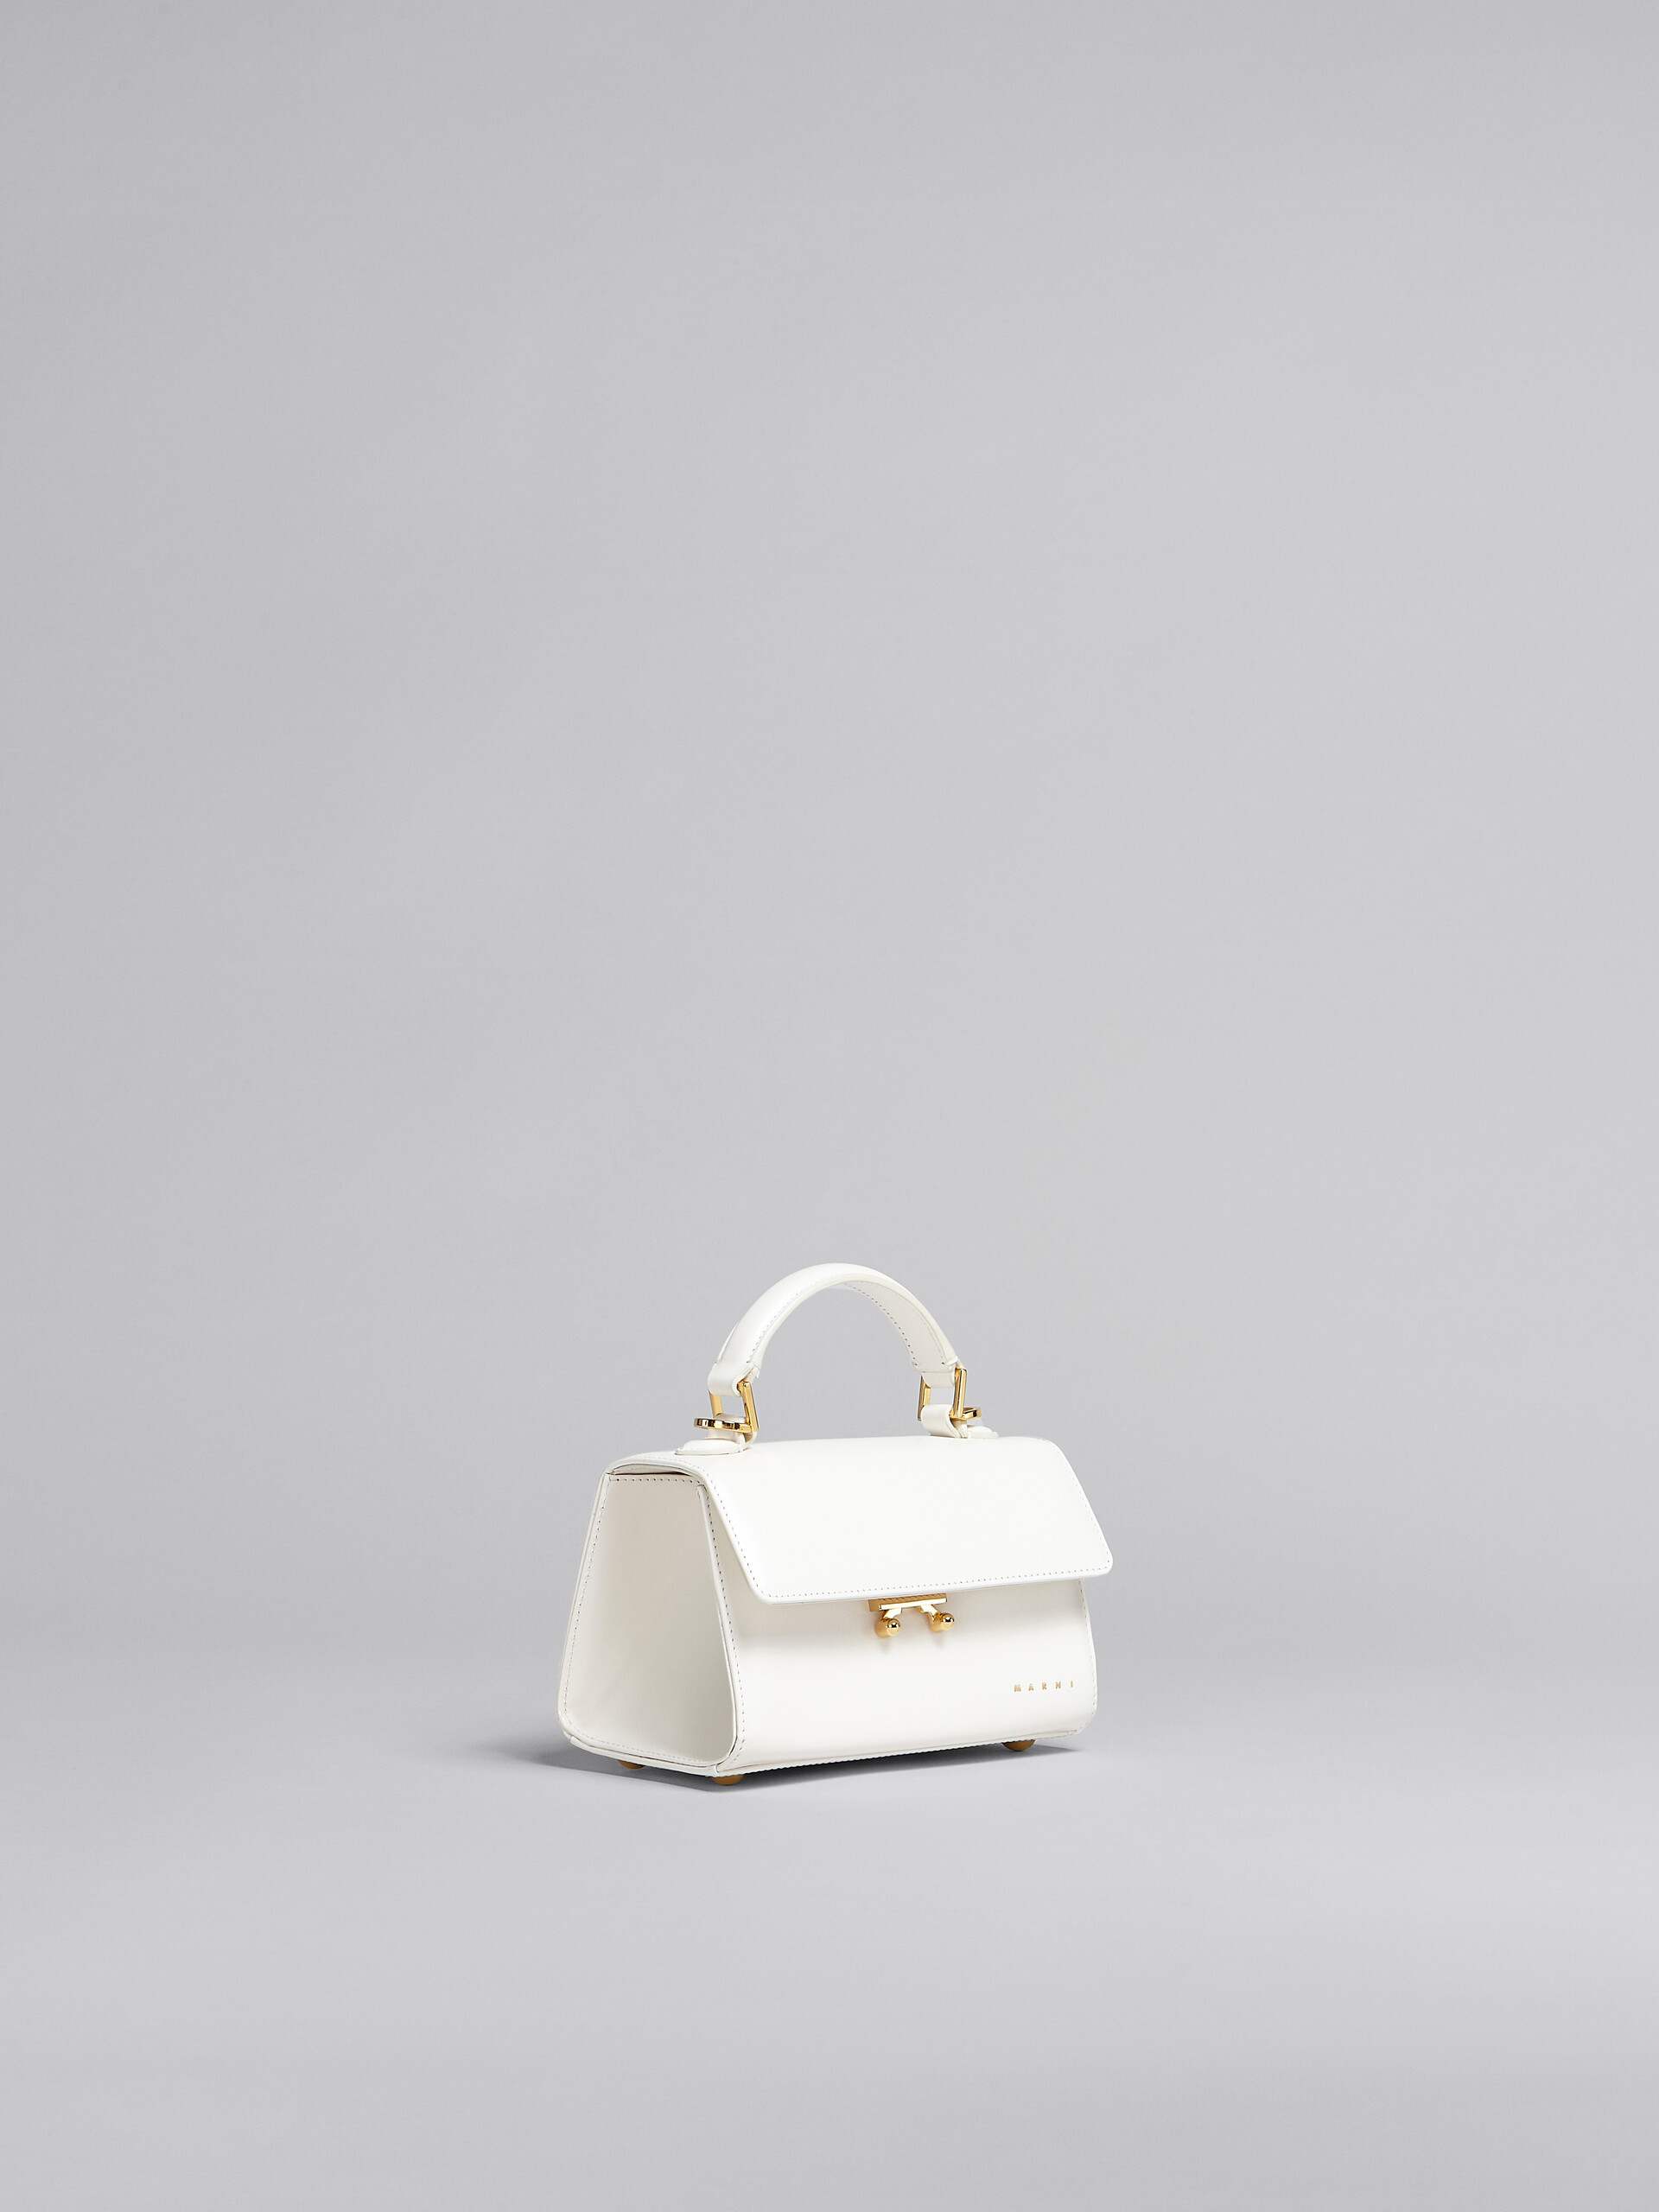 Relativity Mini Bag in white leather - Handbags - Image 6